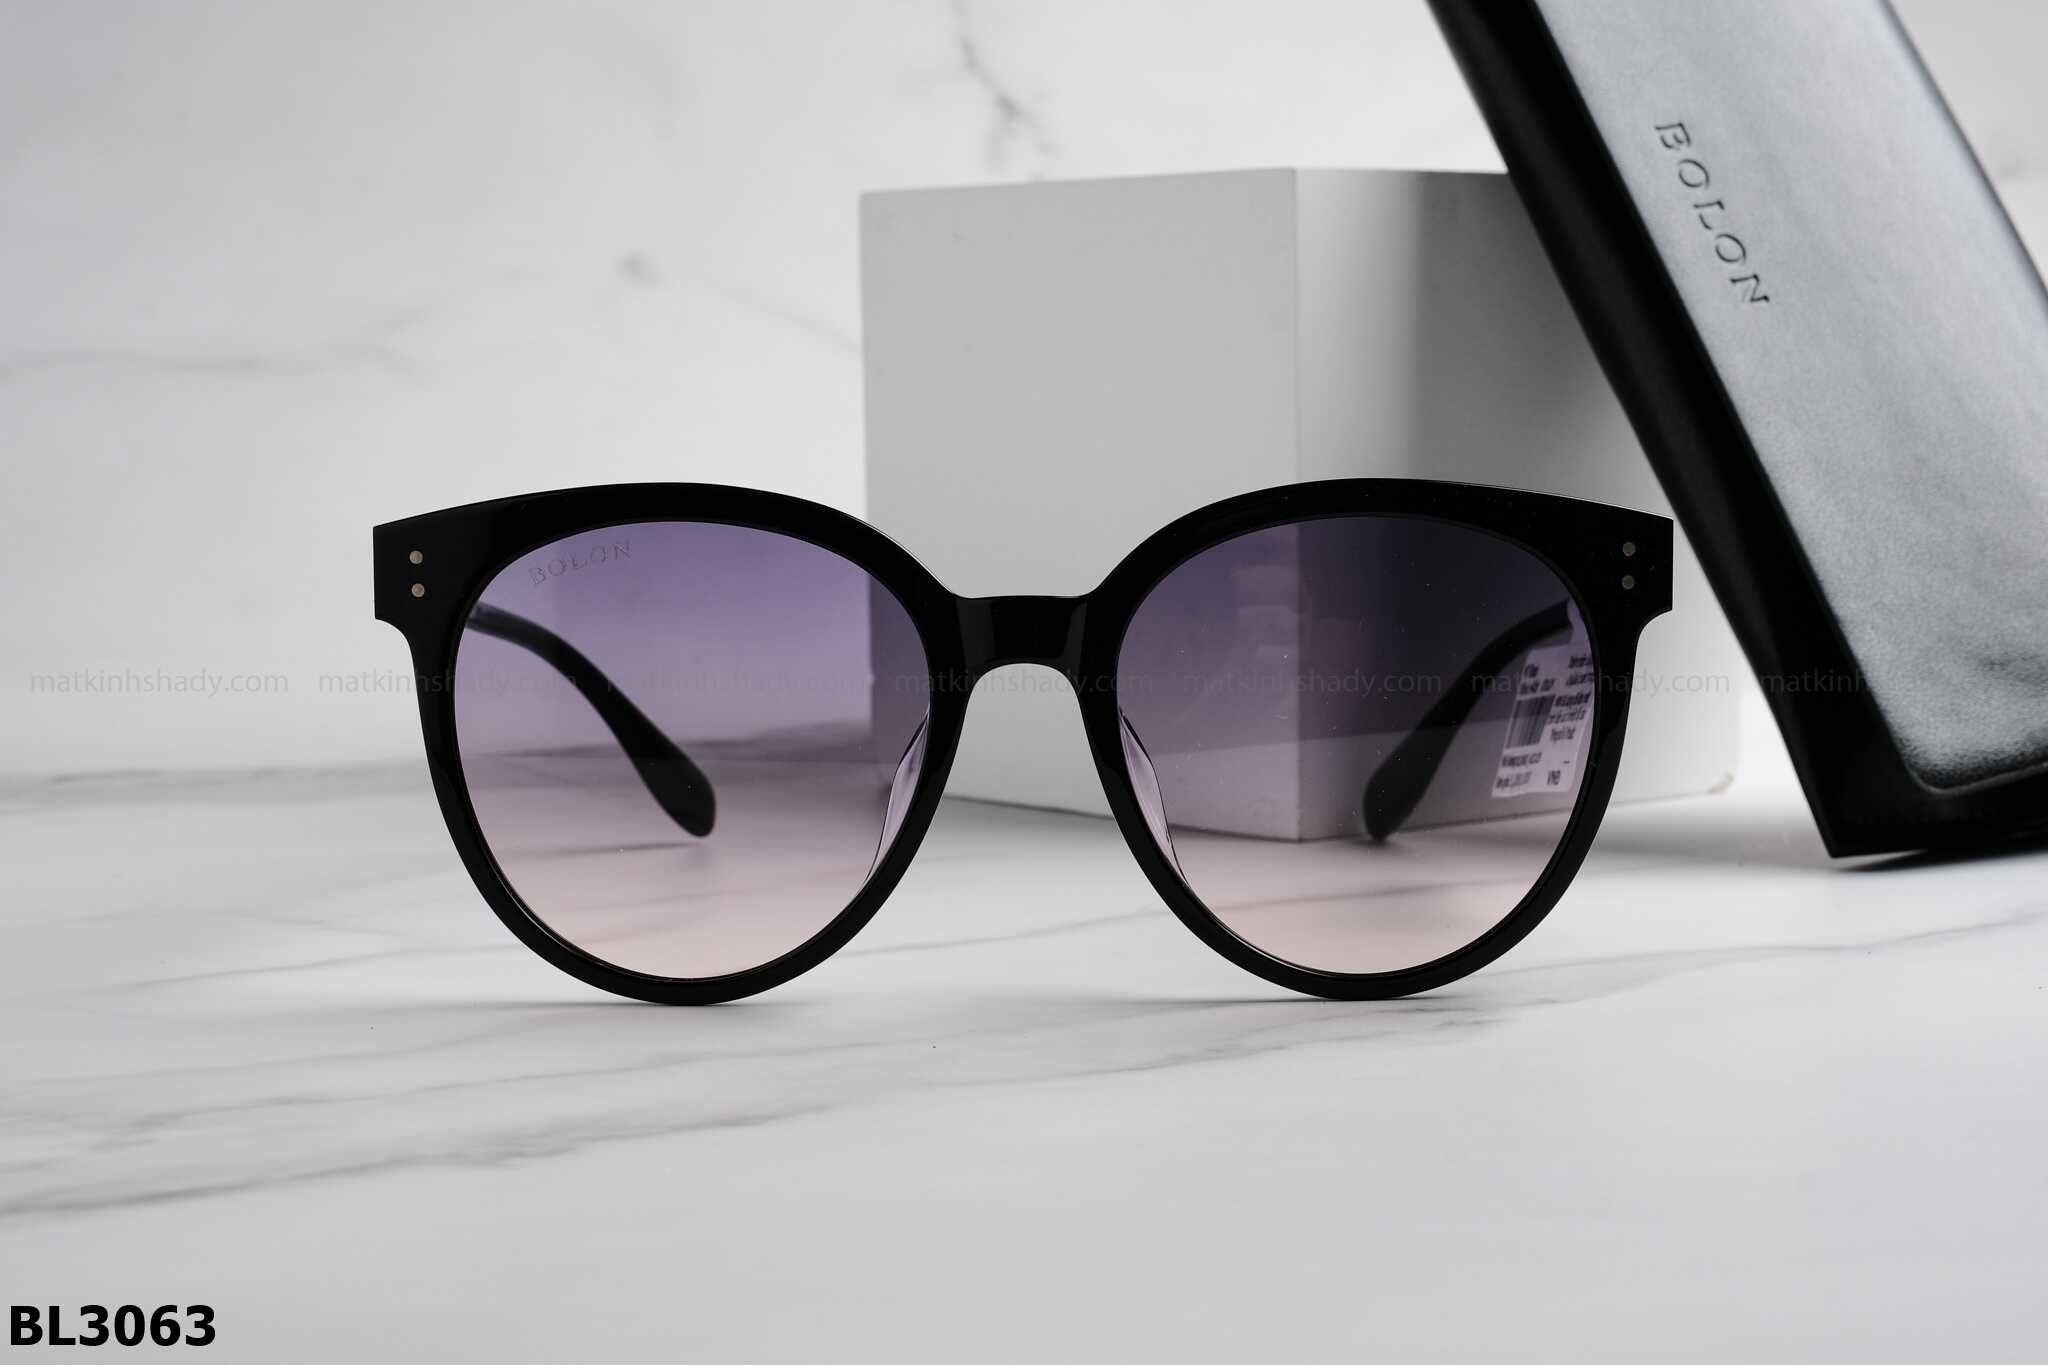  Bolon Eyewear - Sunglasses - BL3063 